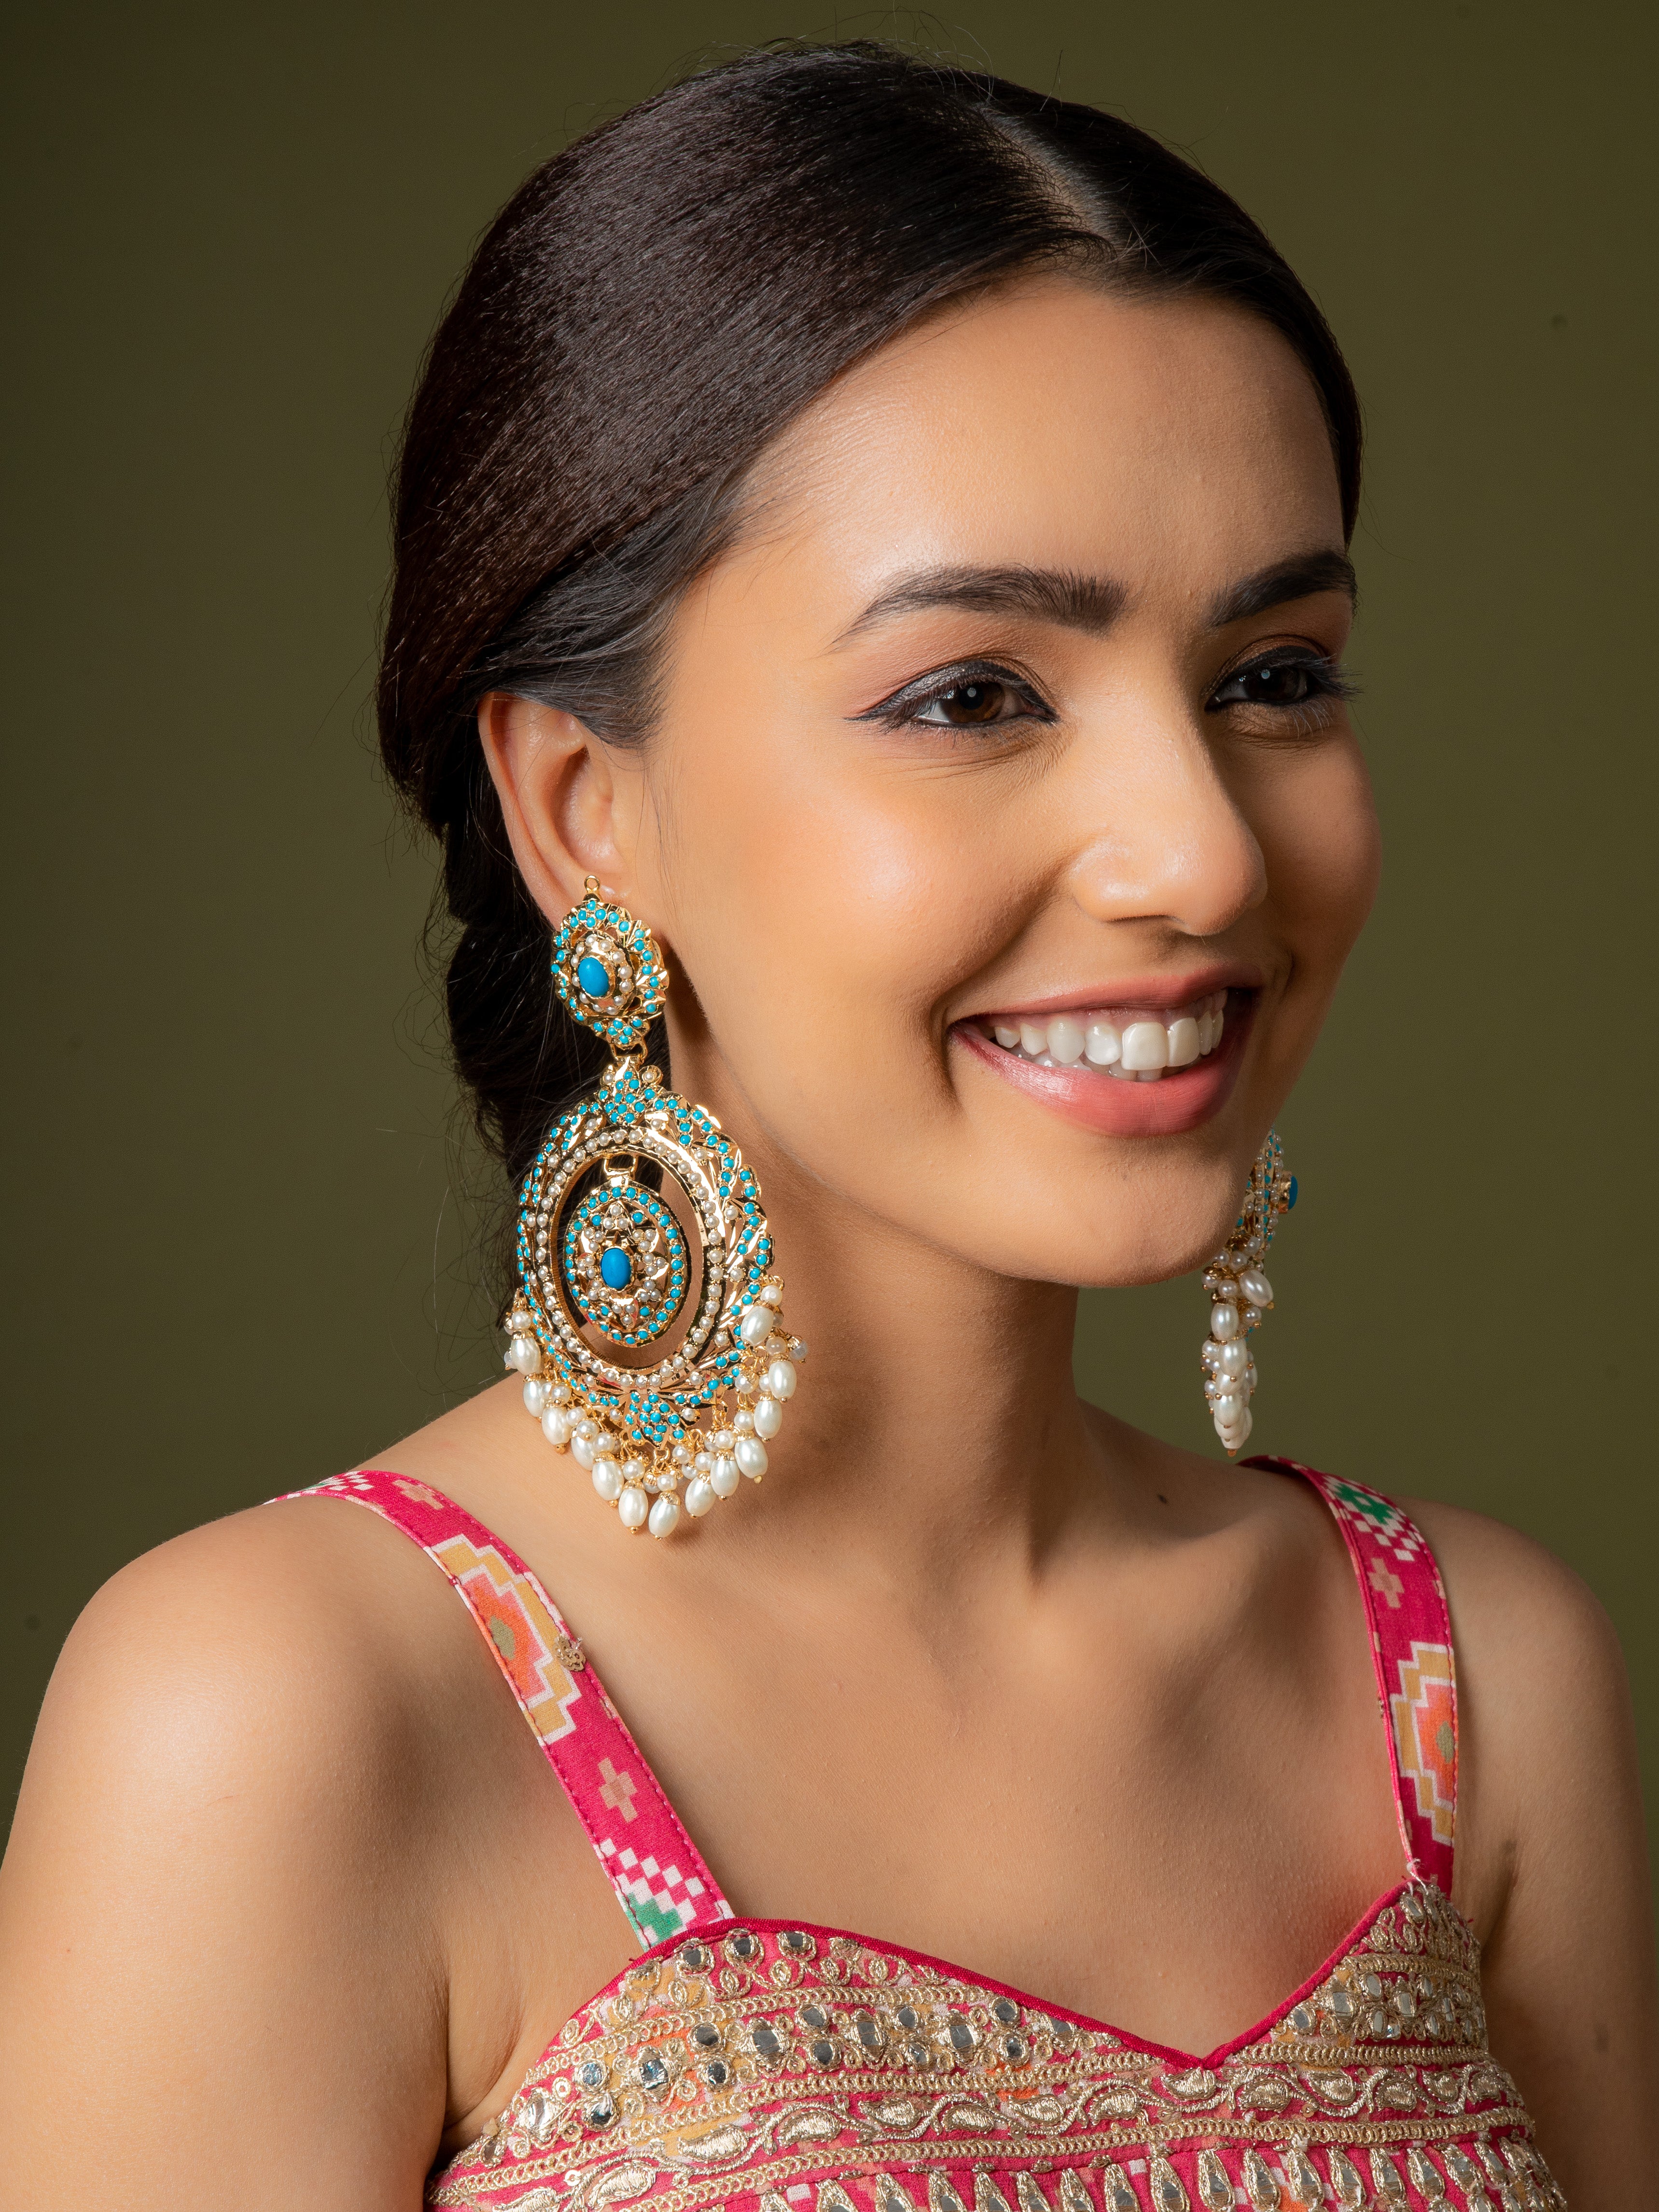 Prisha Jadau Chaandbali Earrings - QUEENS JEWELS